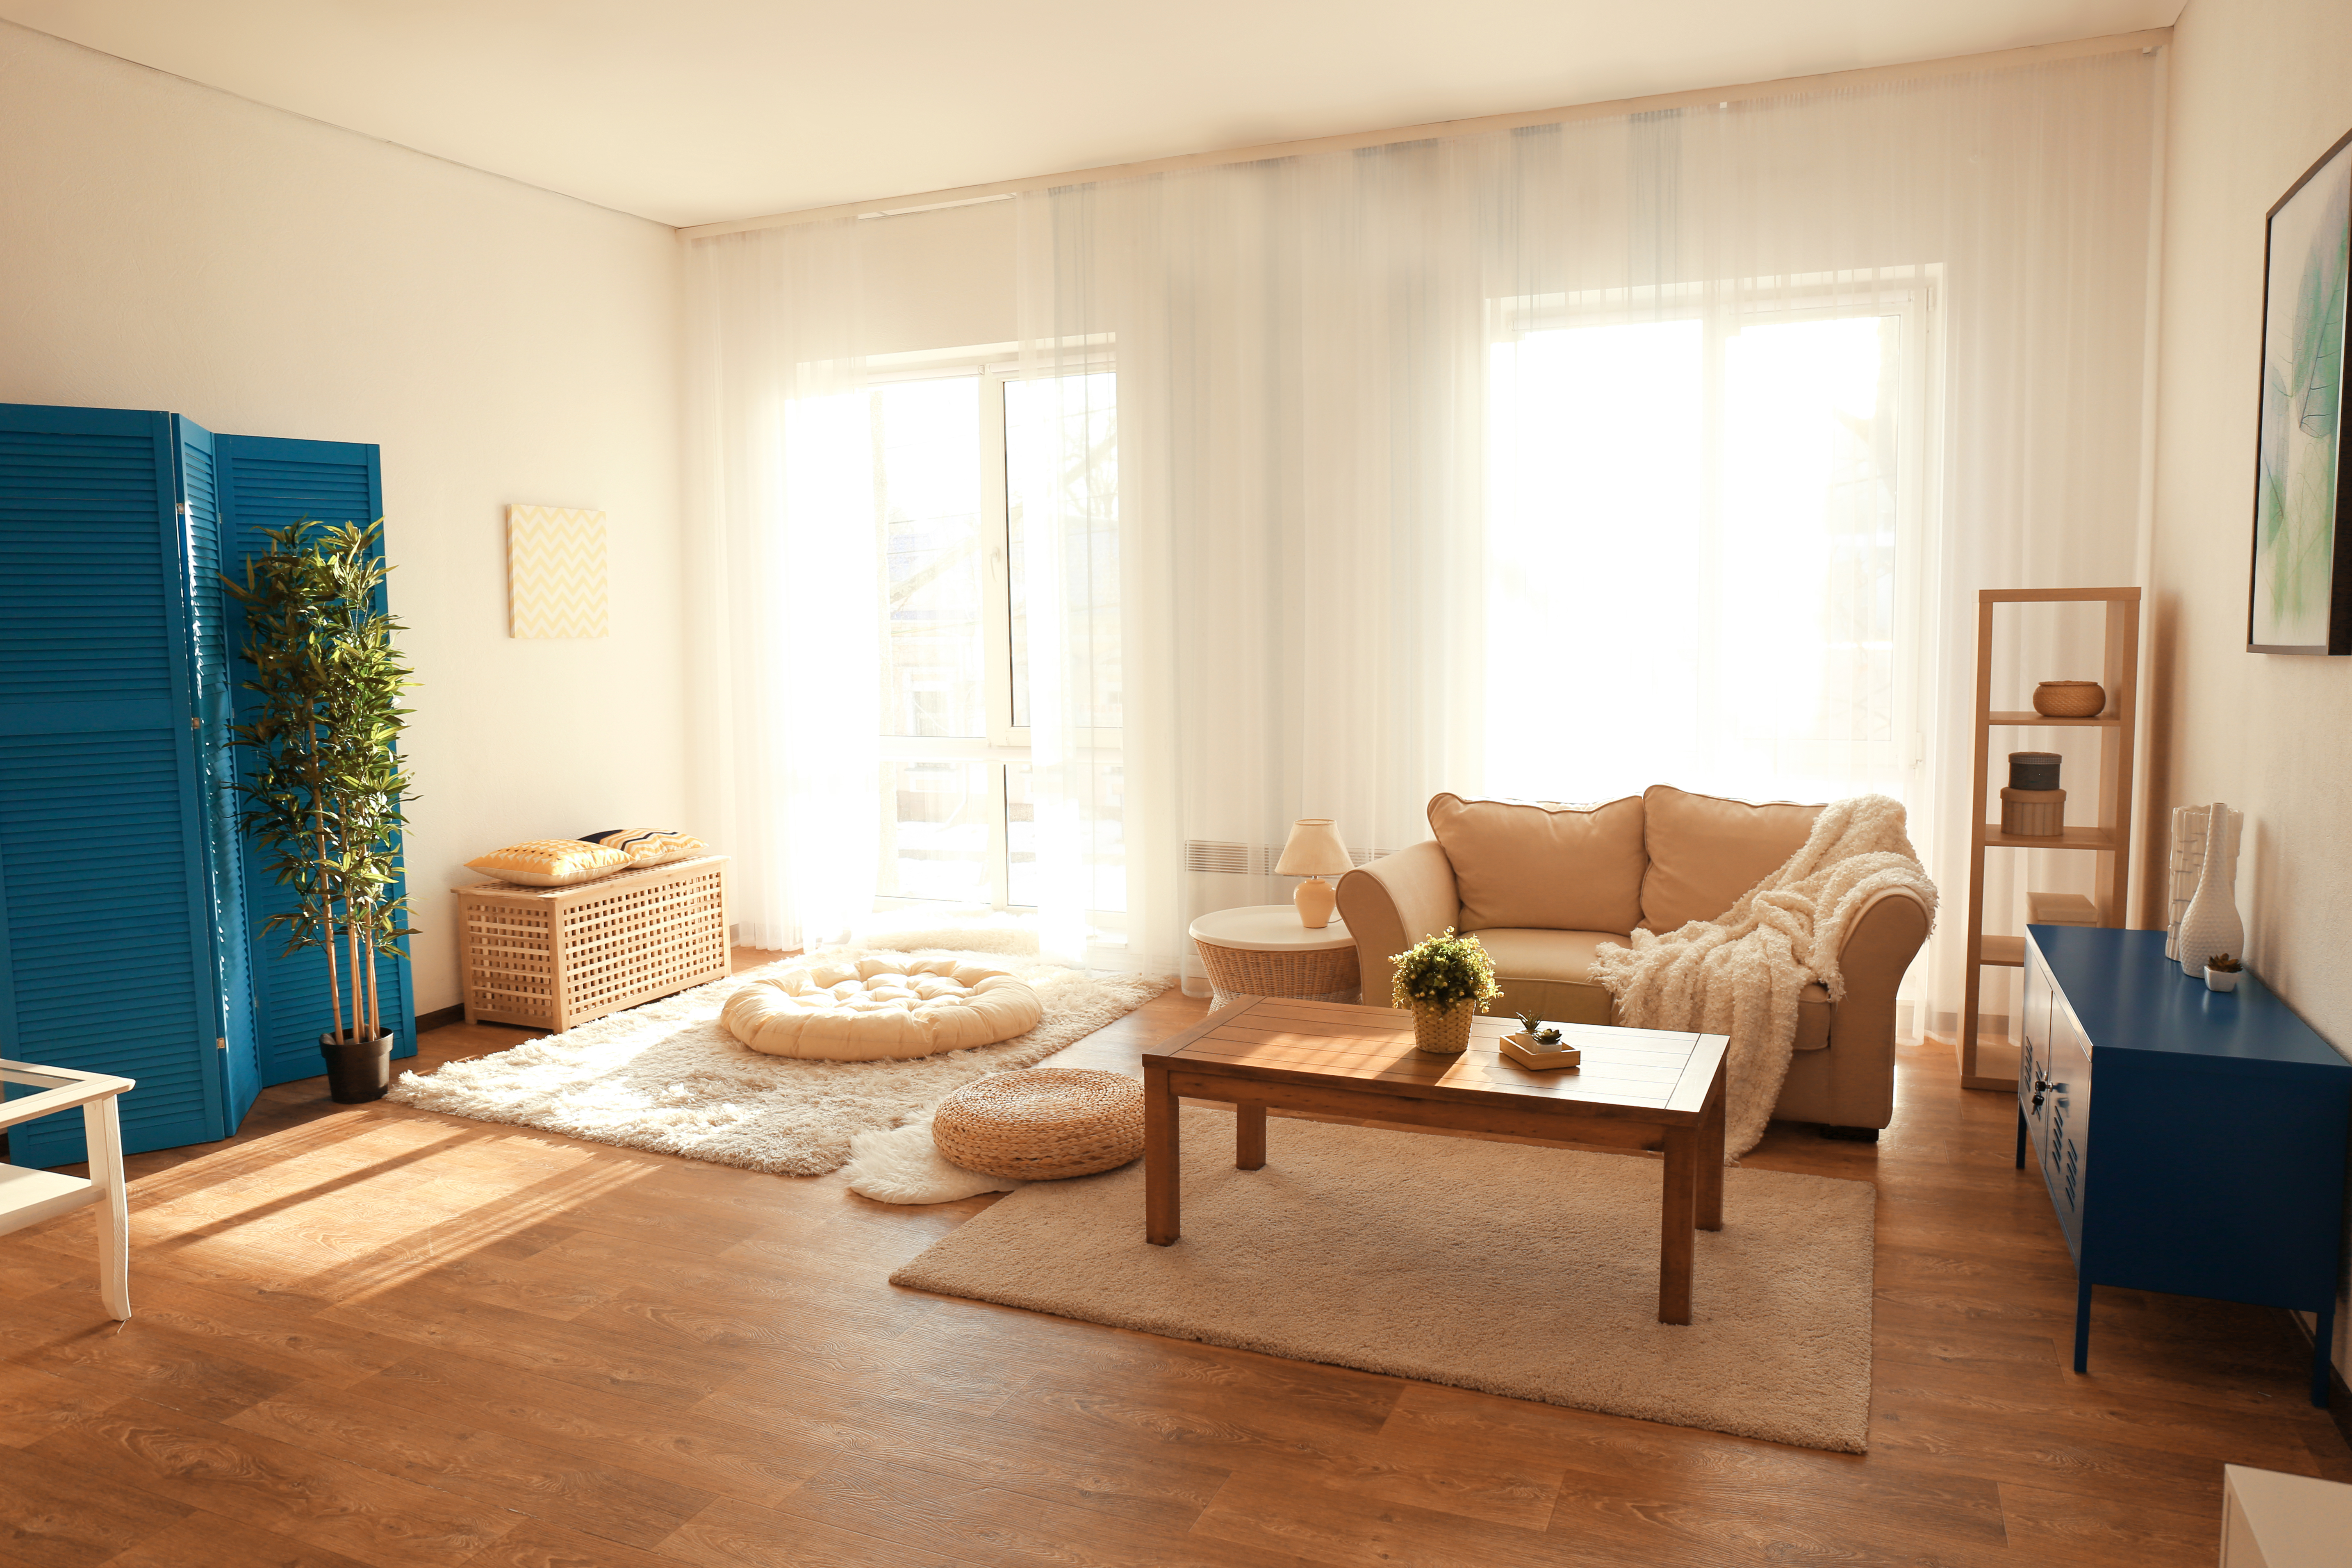 Modern interior of living room | Source: Shutterstock